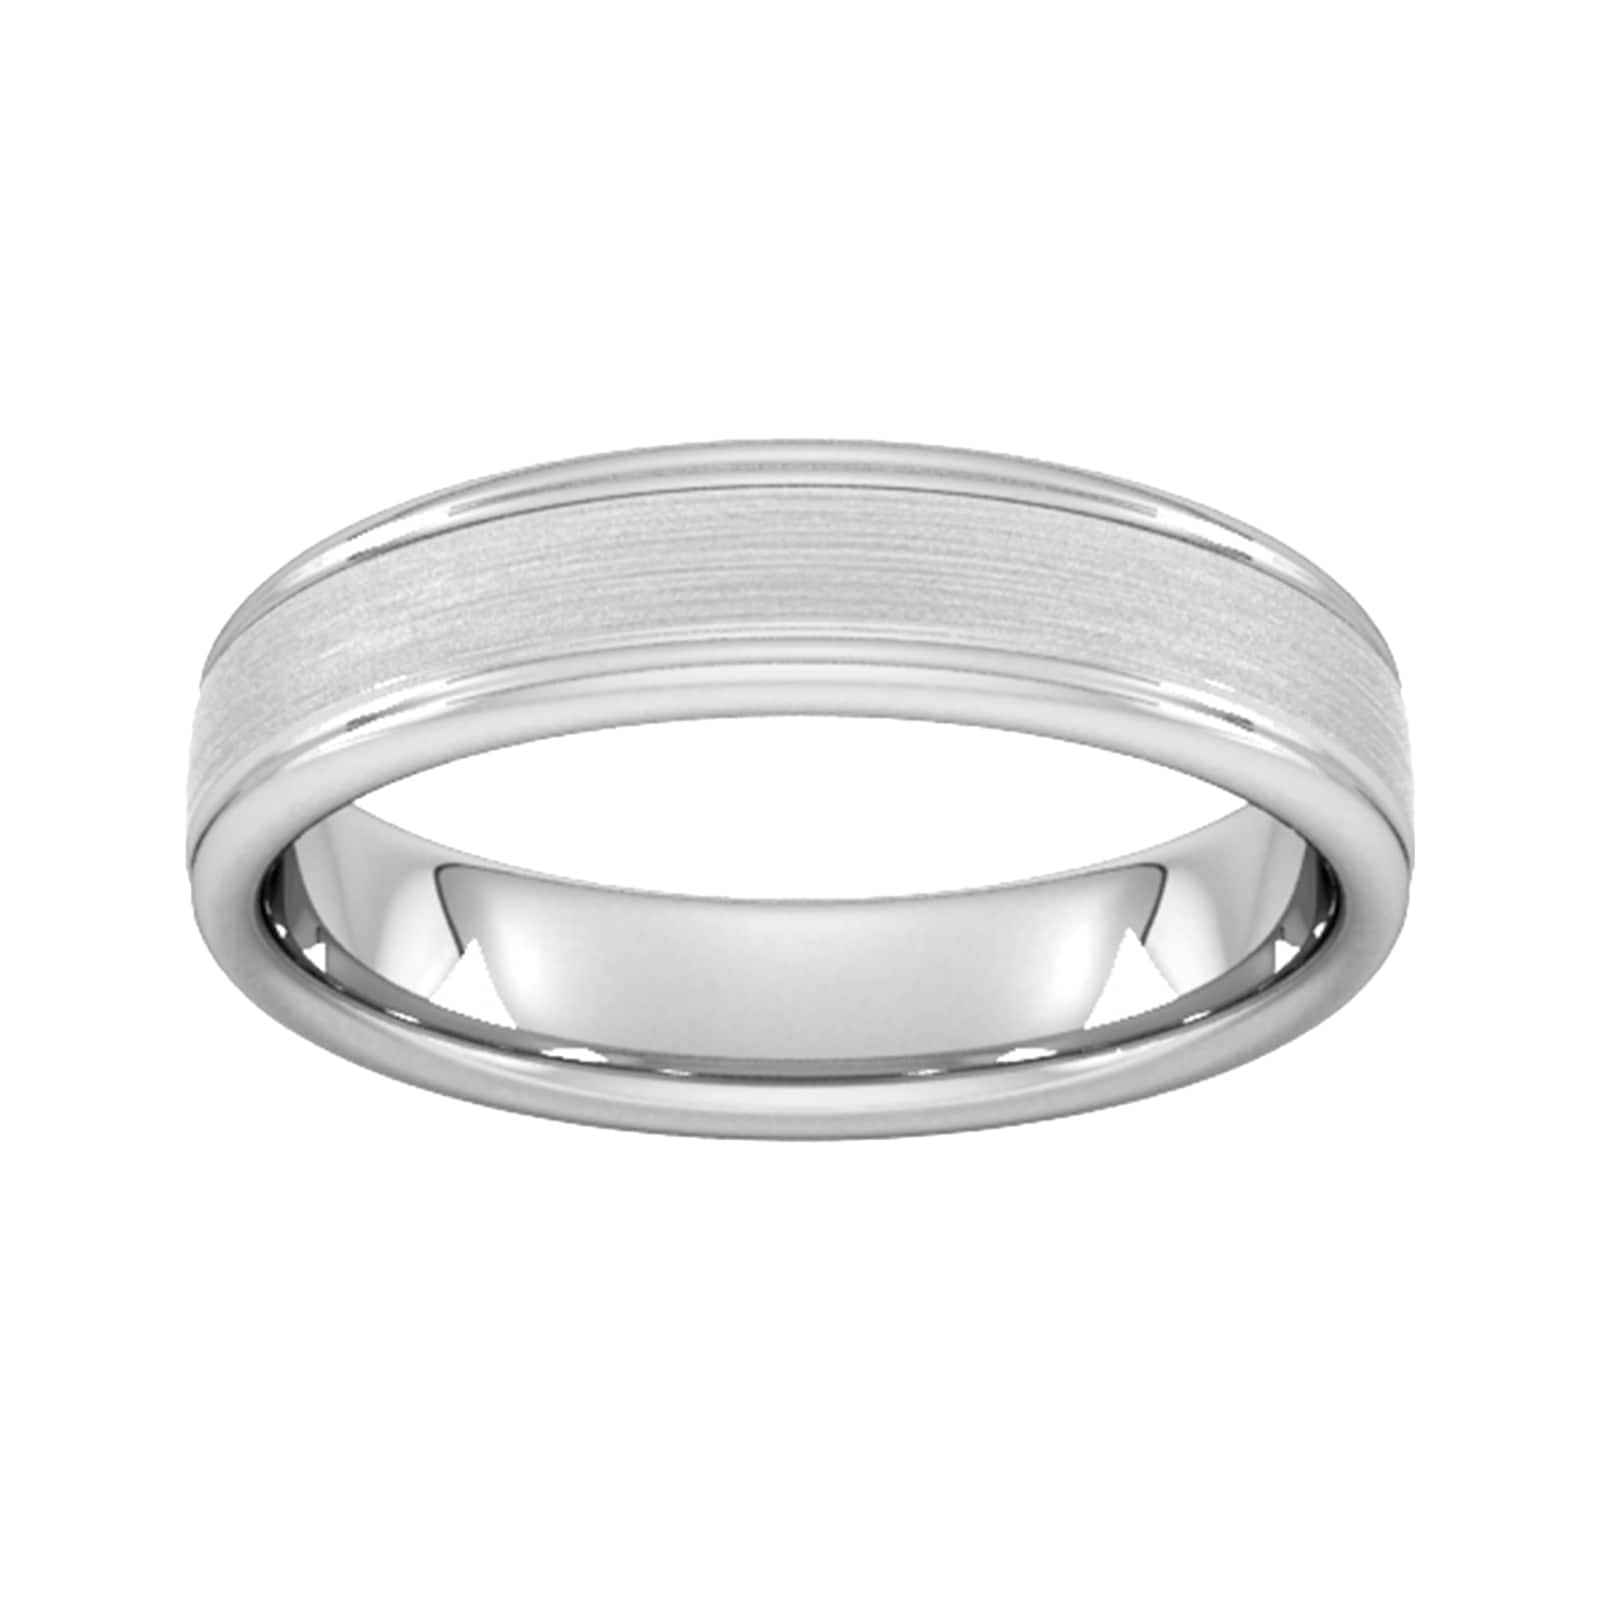 5mm D Shape Heavy Matt Centre With Grooves Wedding Ring In 950 Palladium - Ring Size V